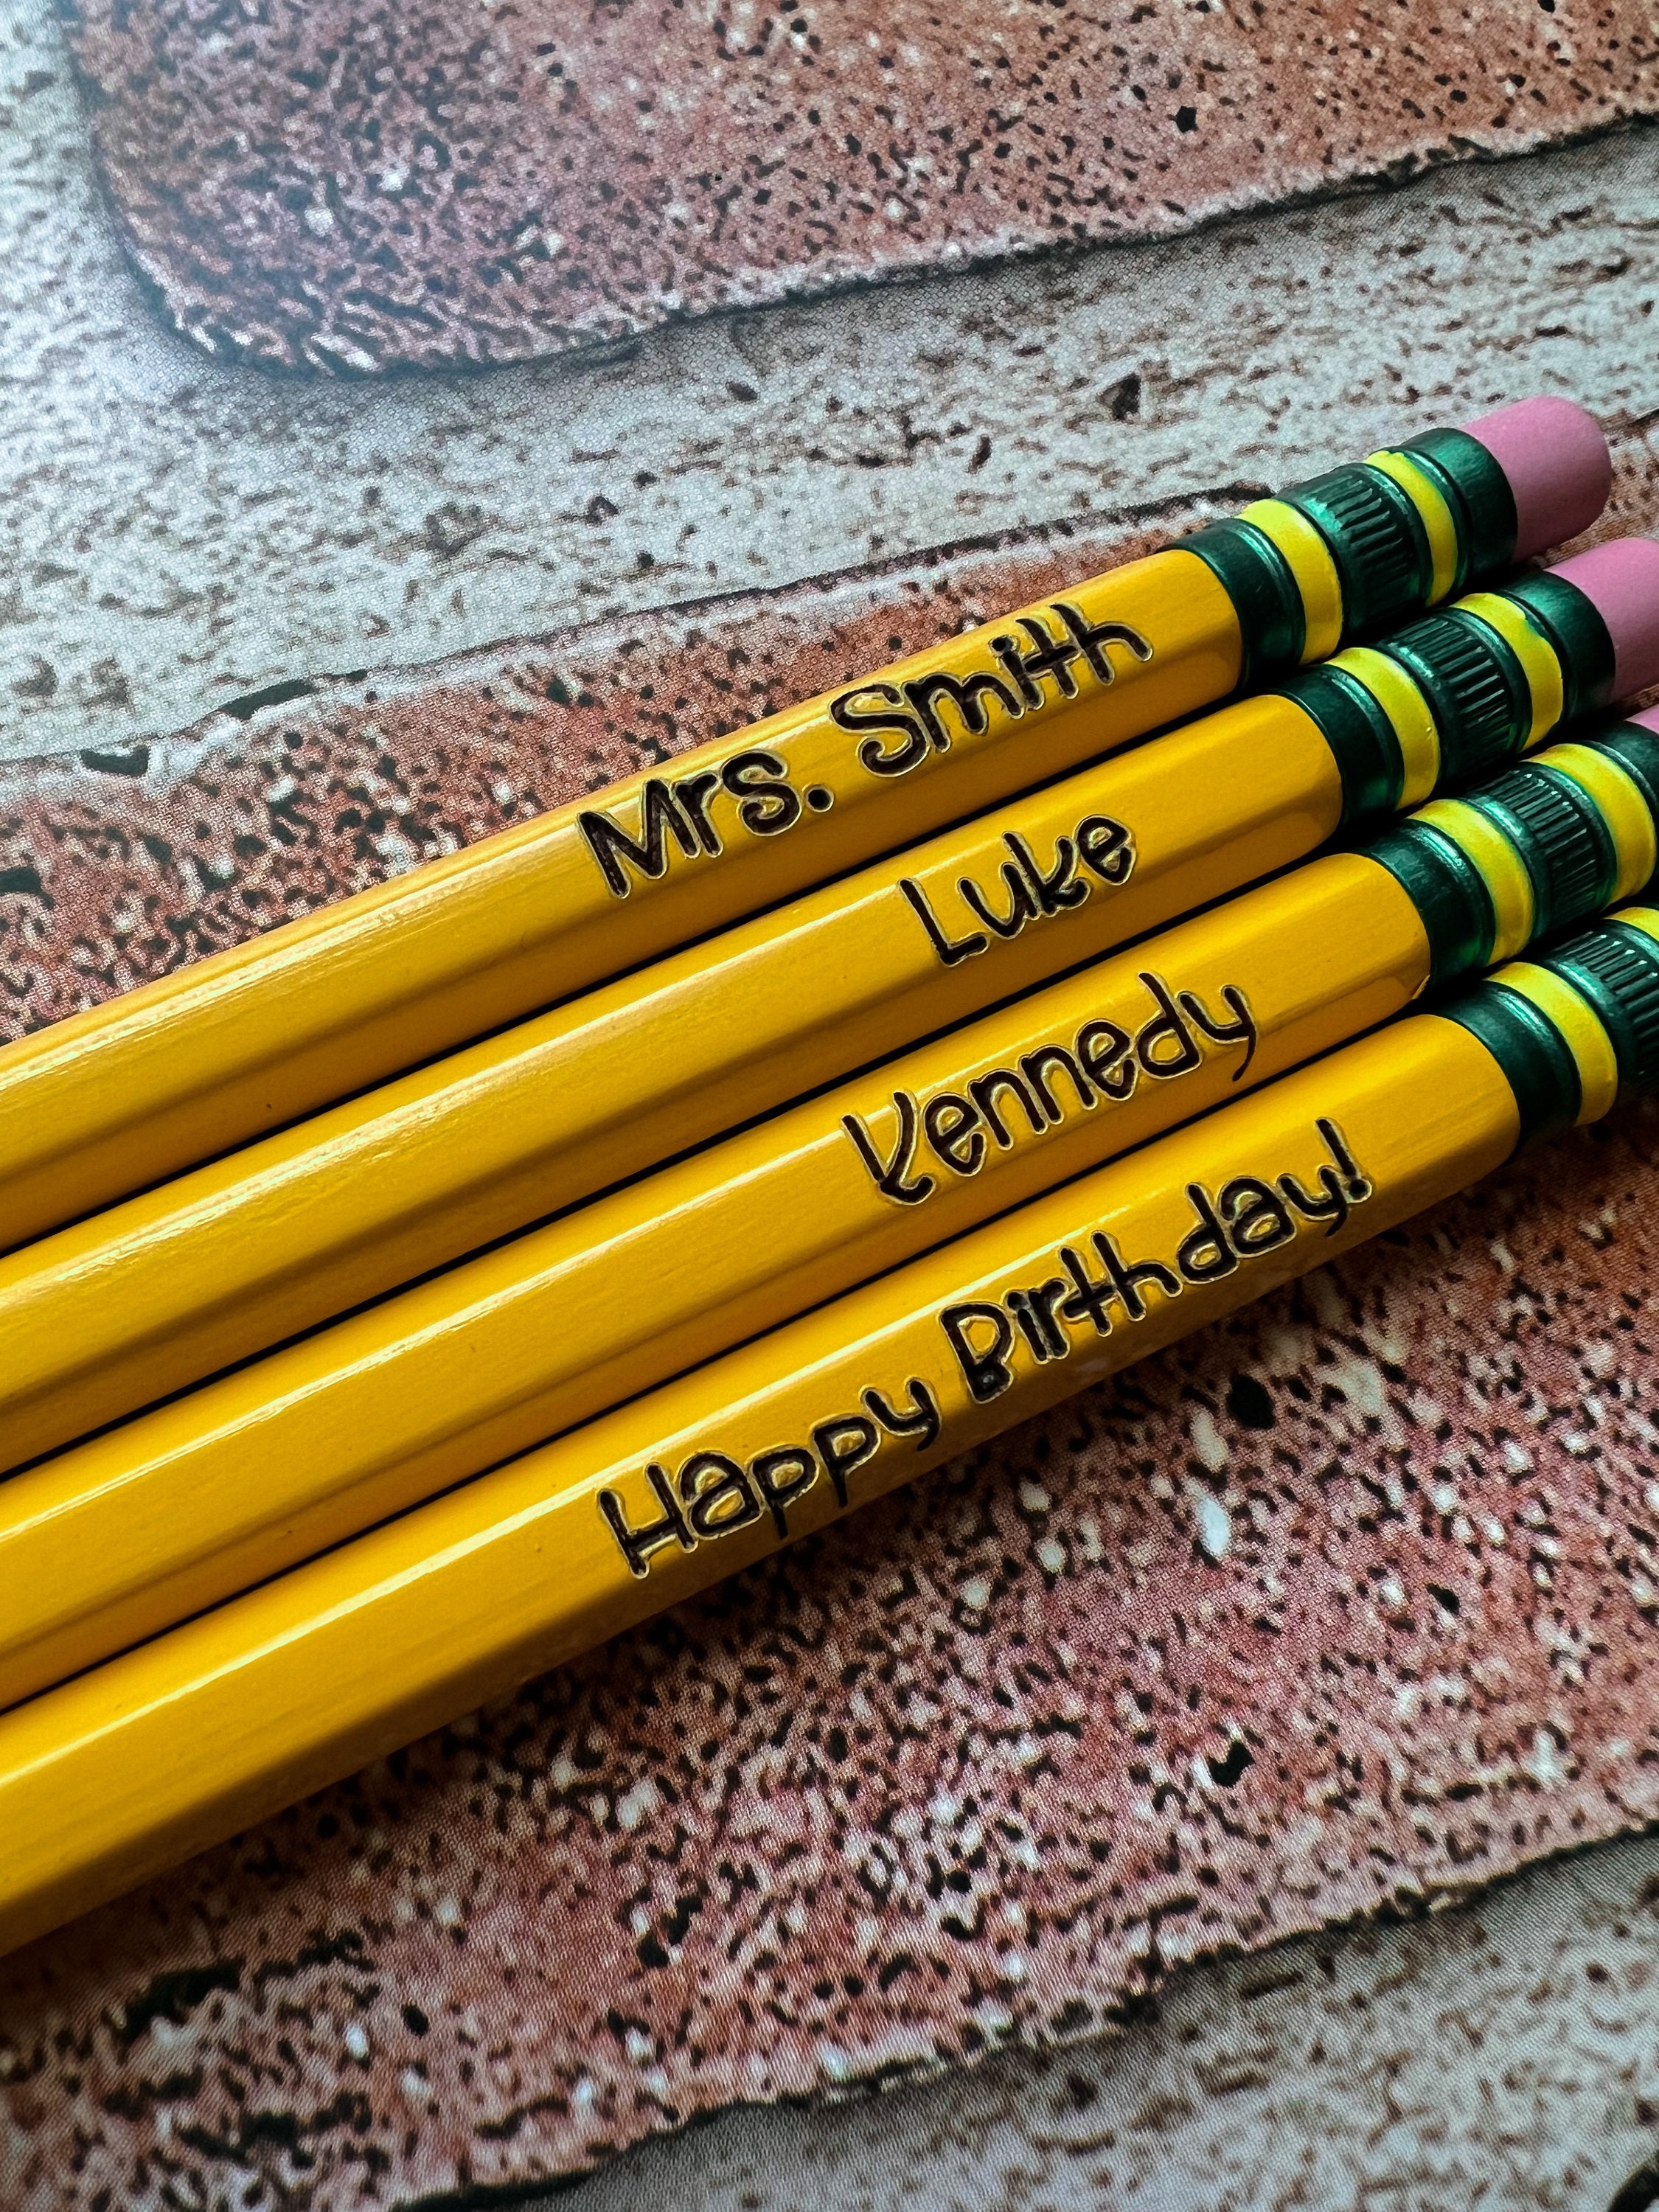 Jolly Supersticks Kinderfest Metallic Colored Pencil Set of 6 From Austria  